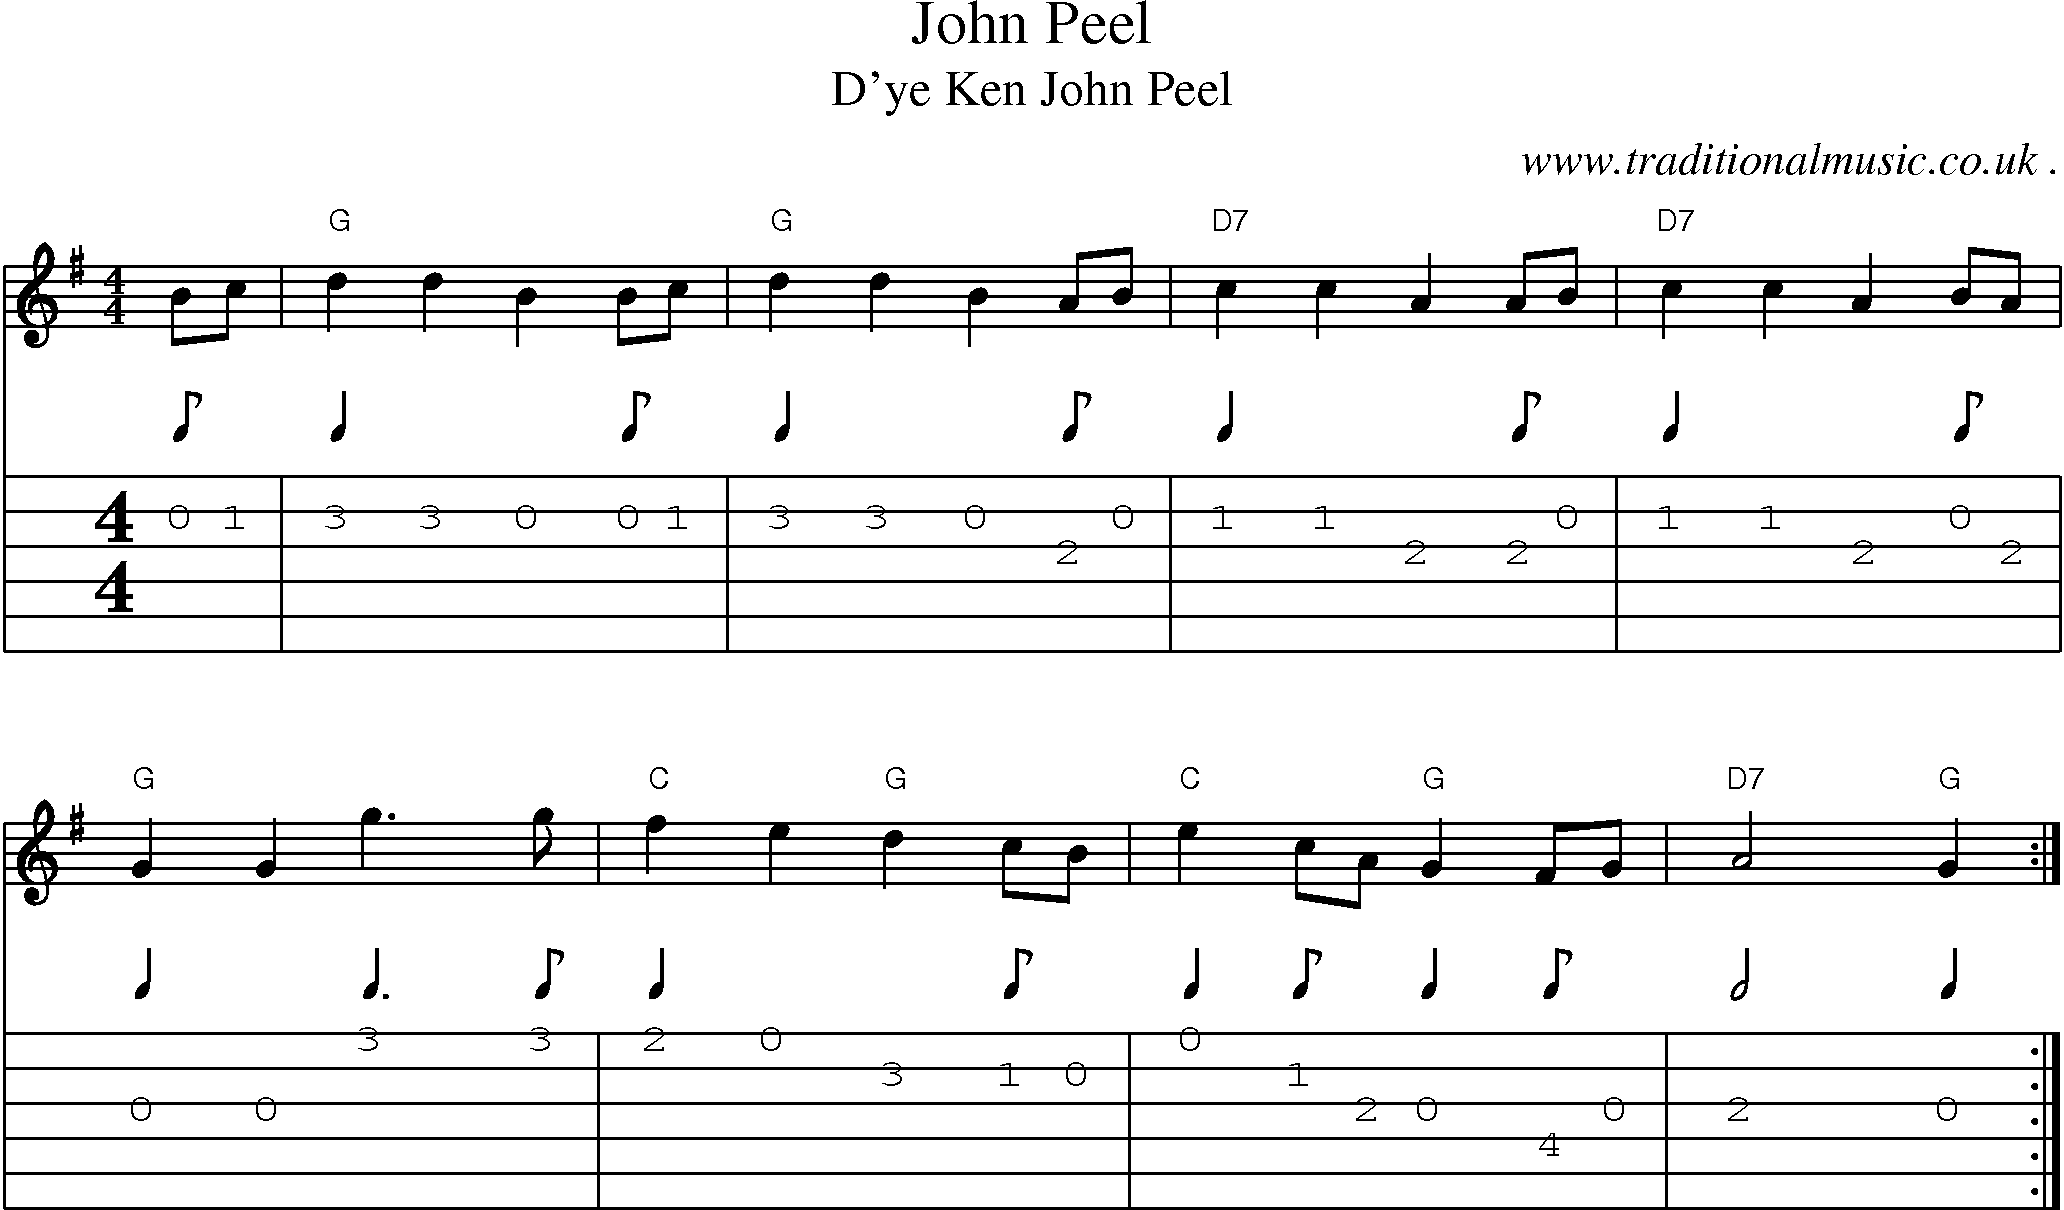 Music Score and Guitar Tabs for John Peel